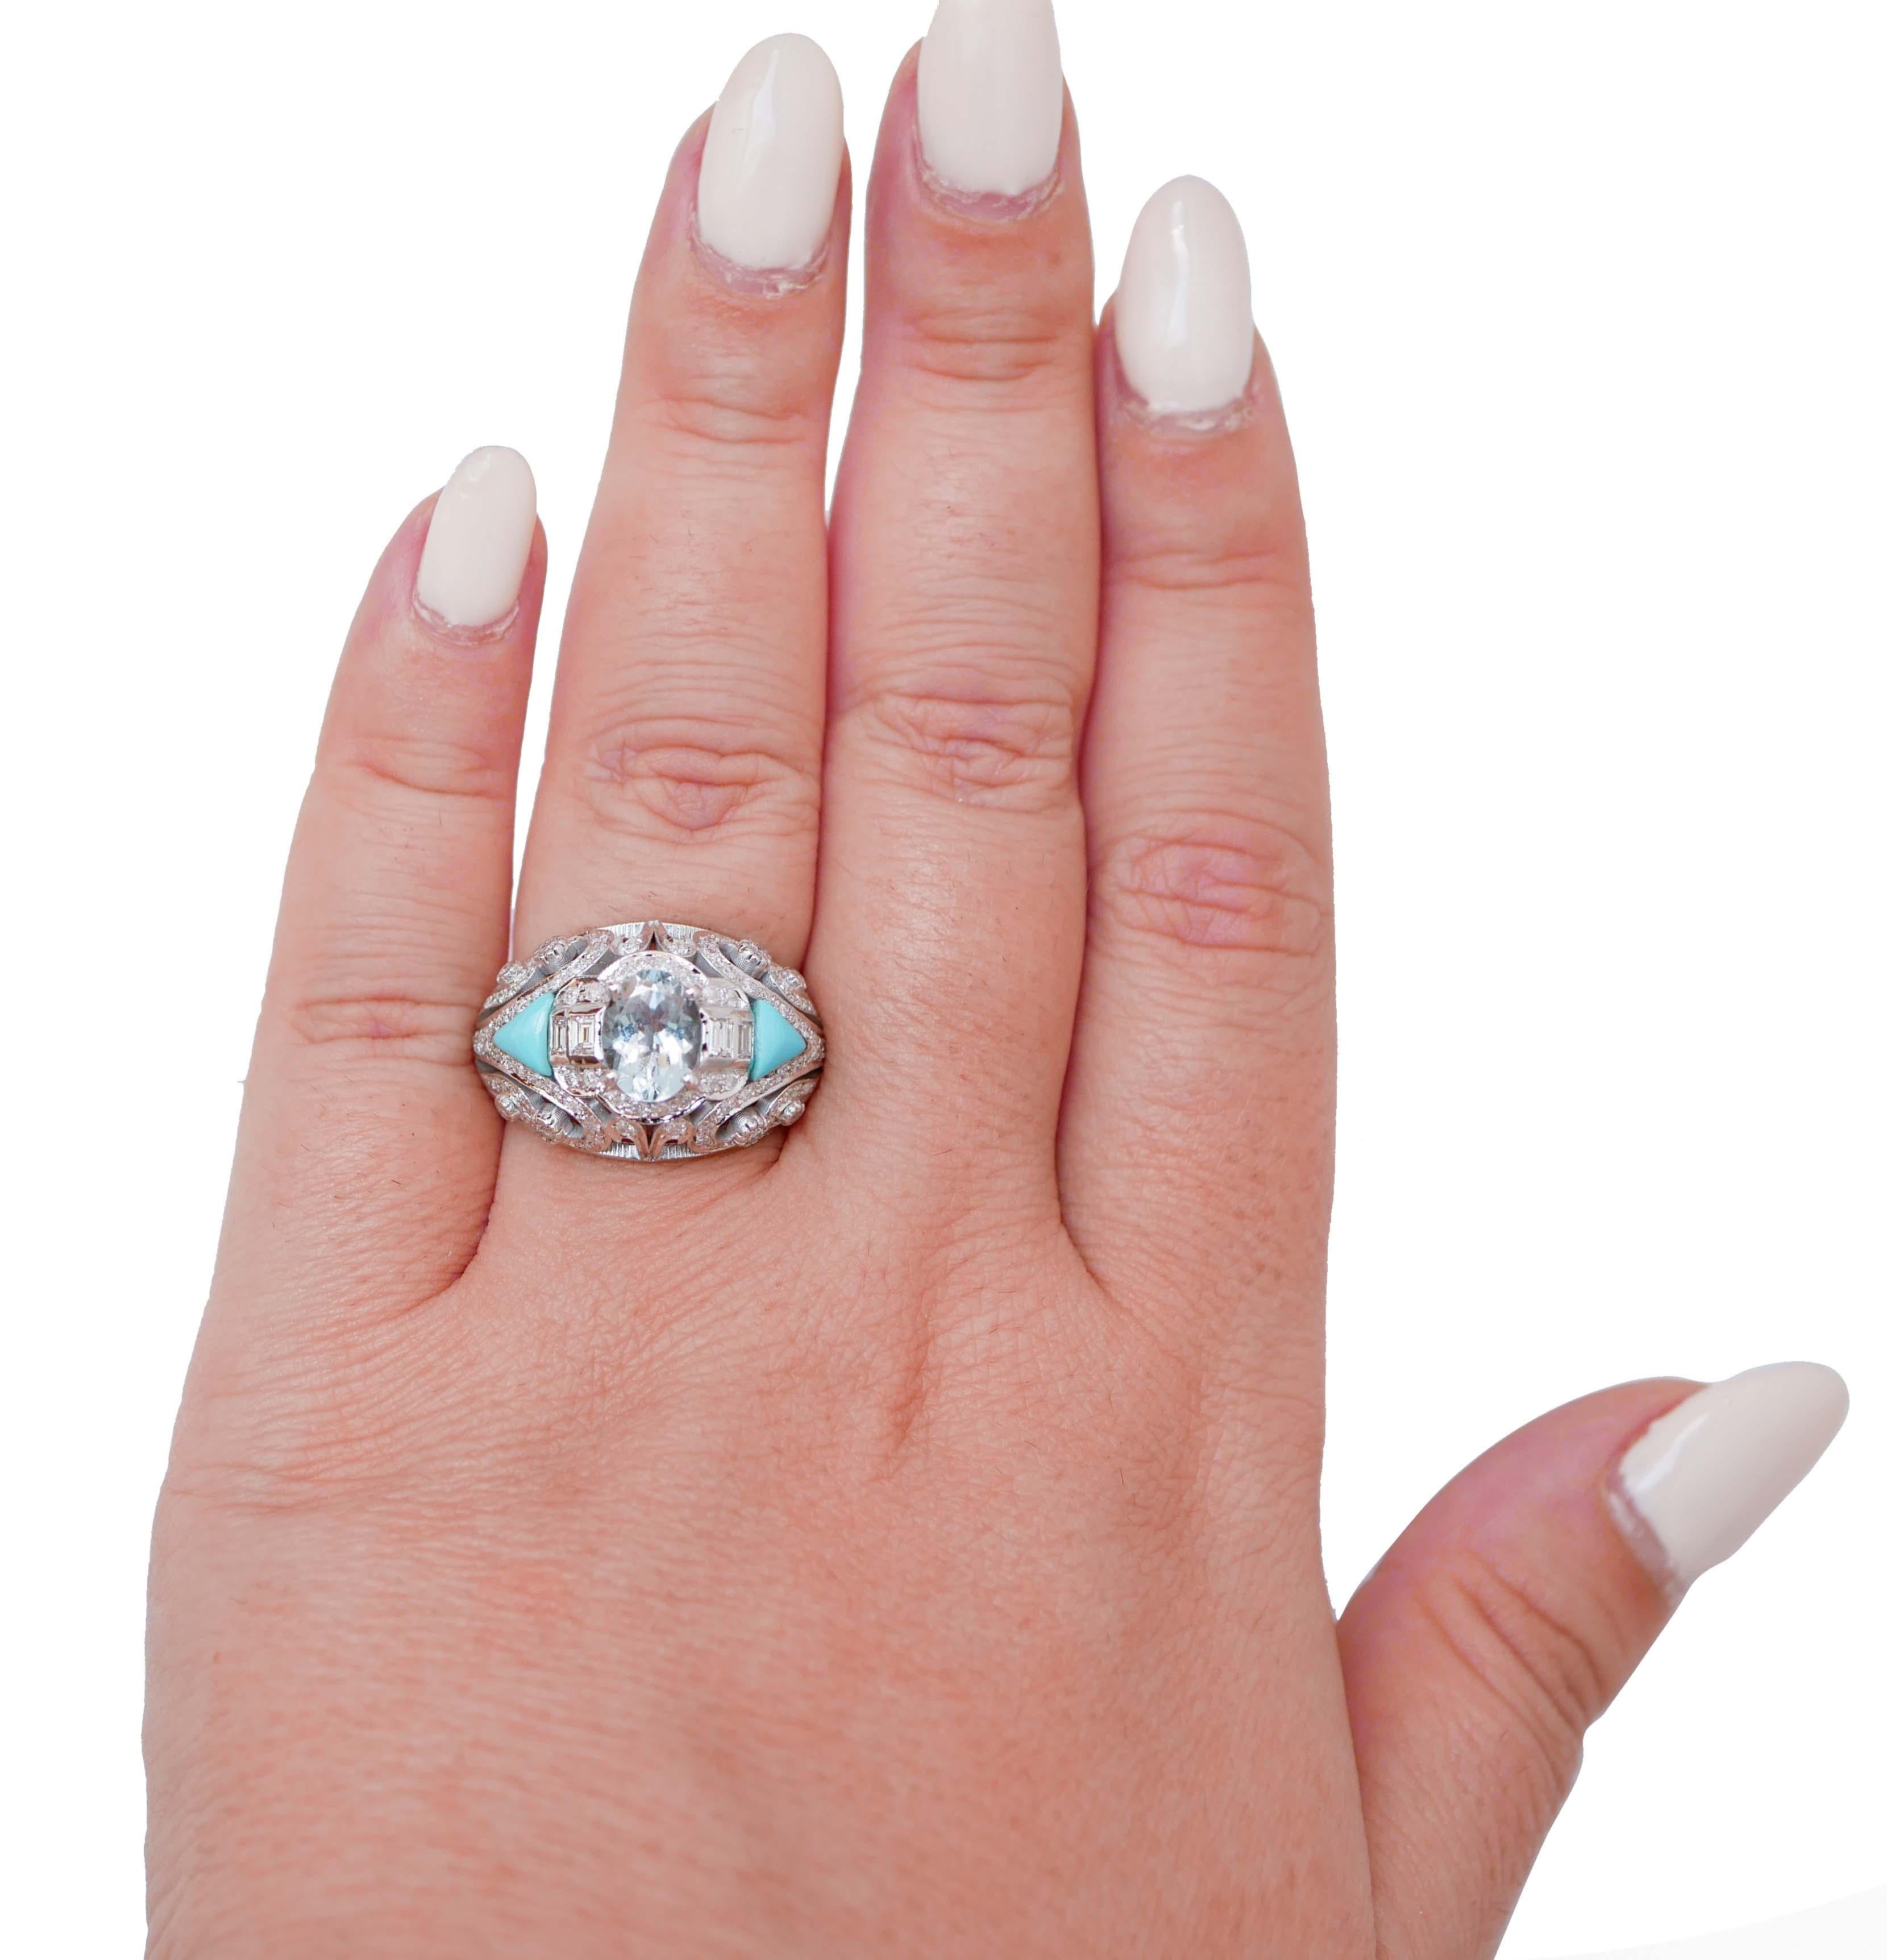 Mixed Cut Turquoise, Aquamarine, Diamonds, 14 Karat White Gold Ring. For Sale